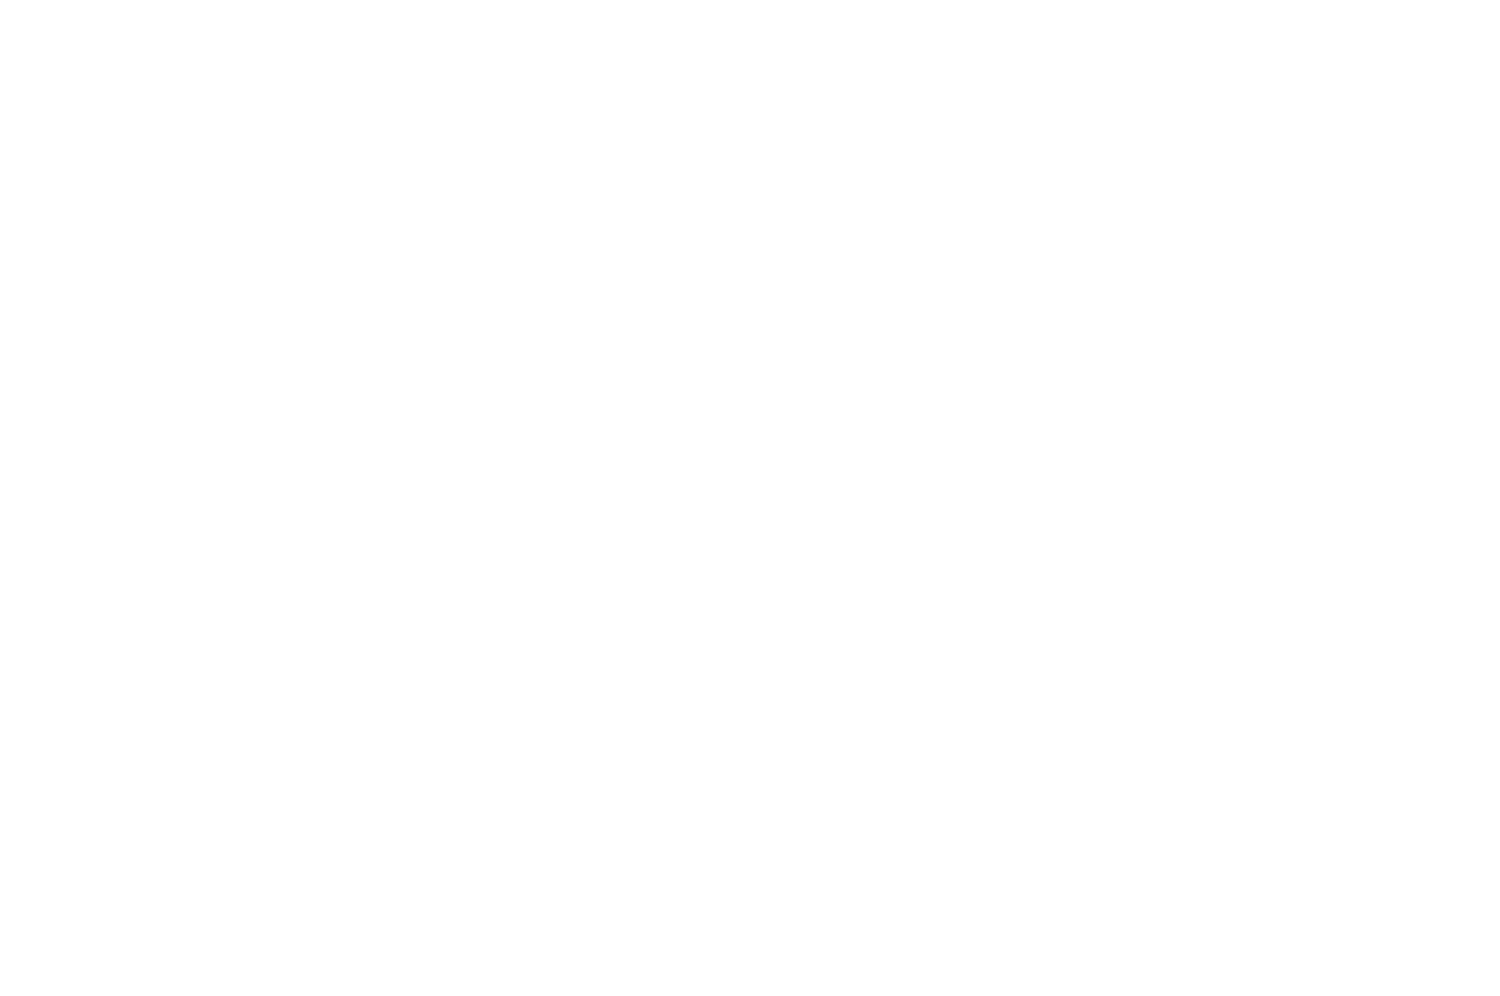 Greyson Group